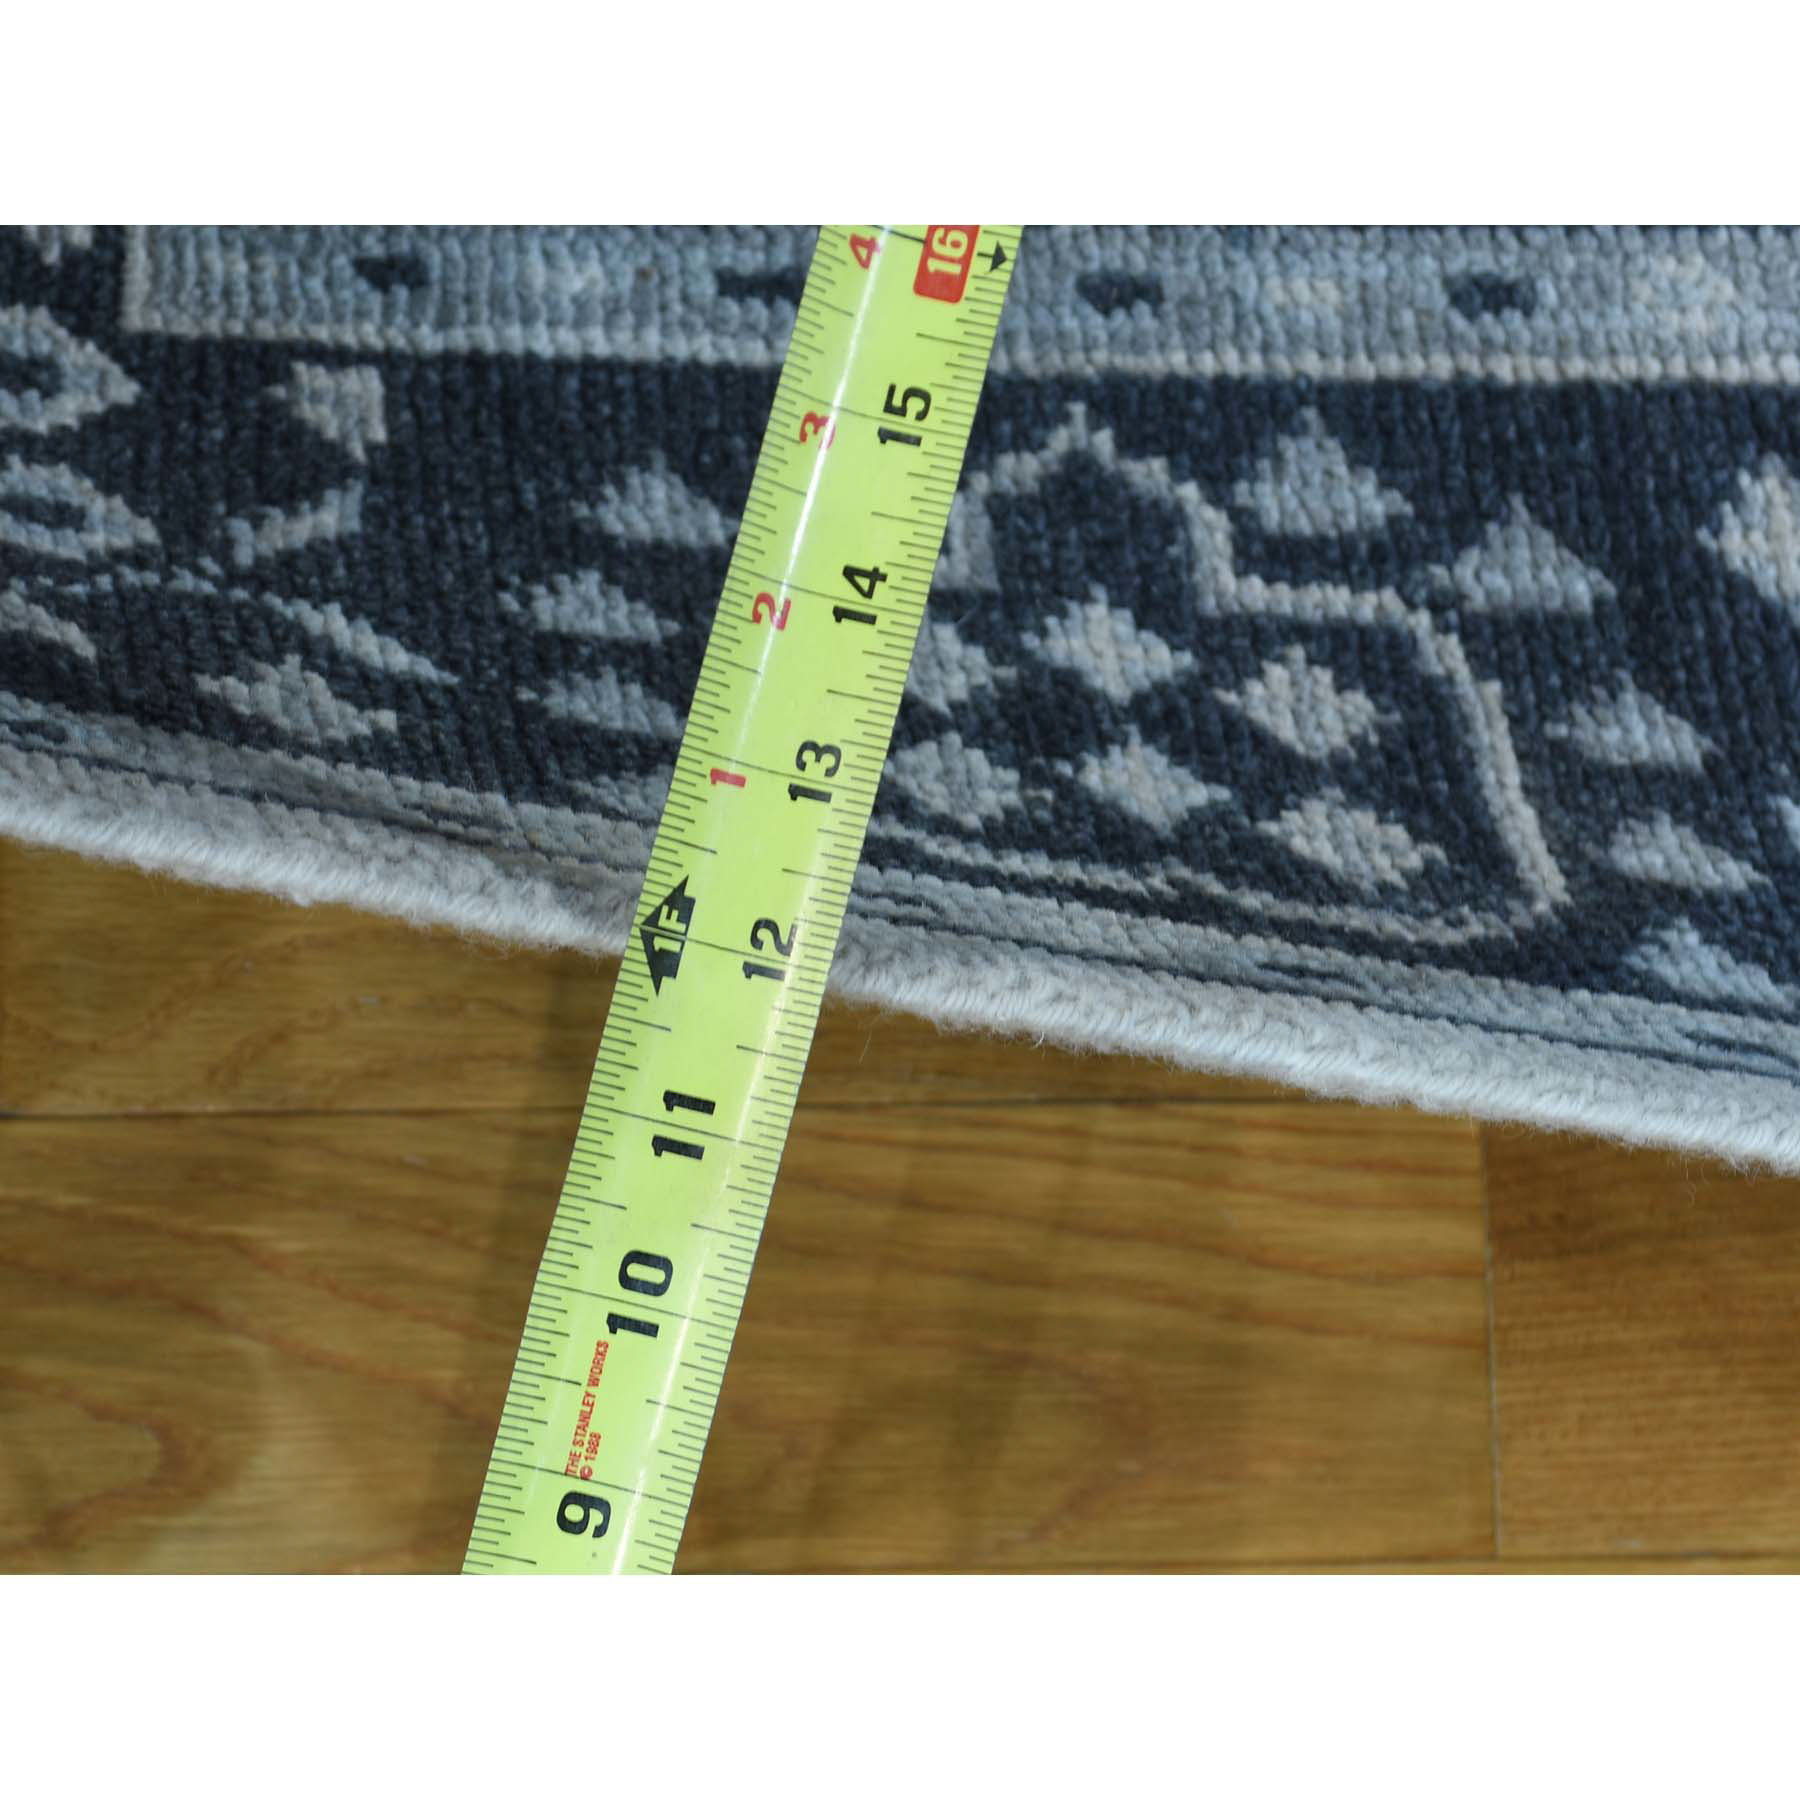 6-x9- Handmade Turkish Knot Oushak Cropped Thin Pure Wool Oriental Rug 